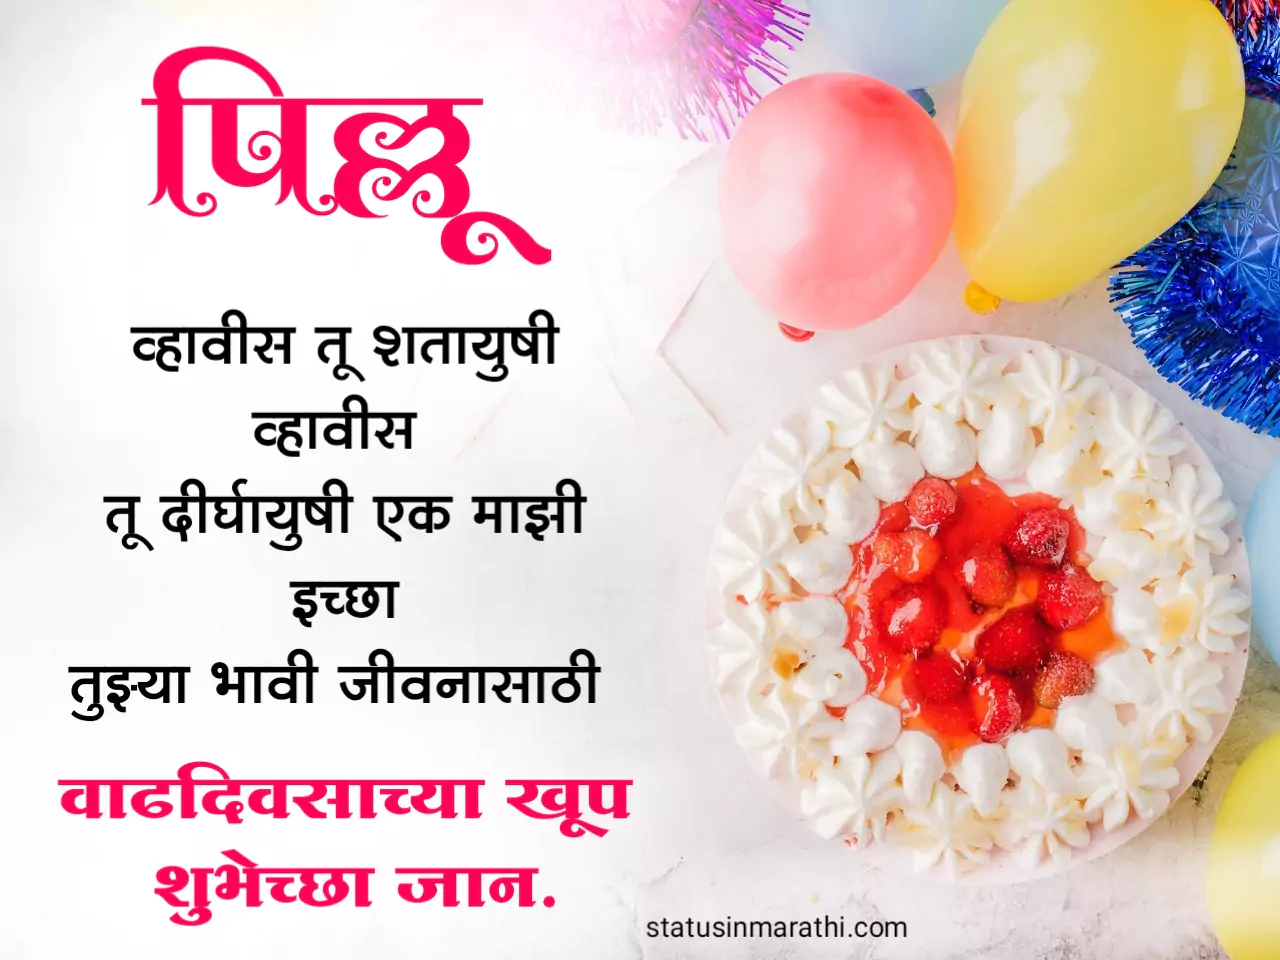 Happy Birthday Image for girlfriend in marathi